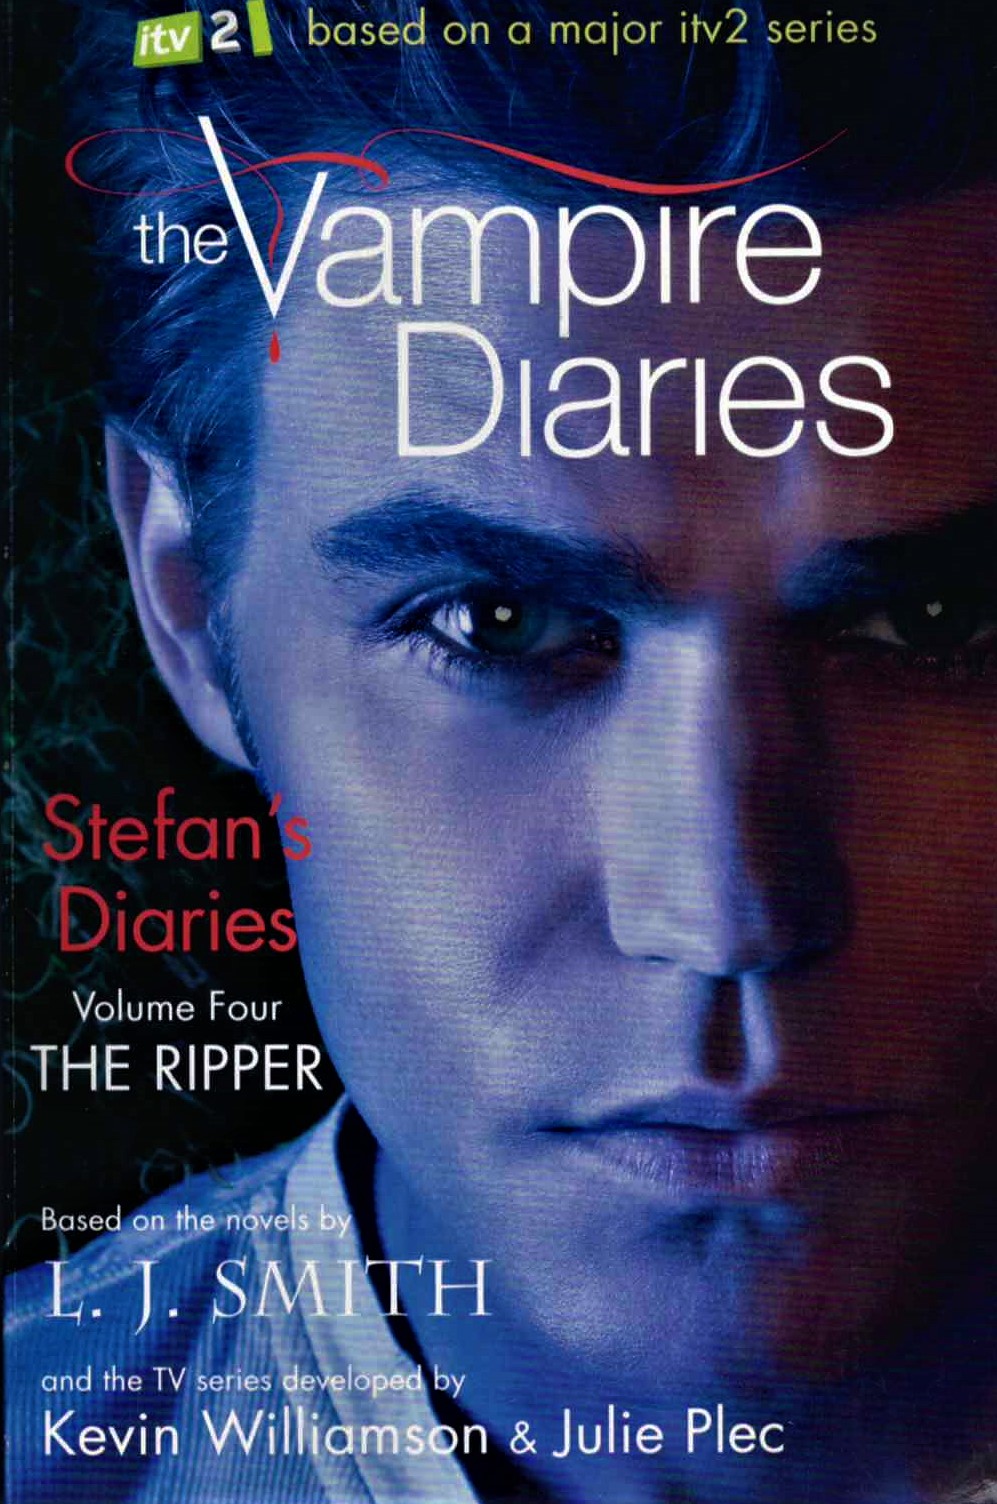 The Vampire Diaries. Stefan's Diaries: The Ripper